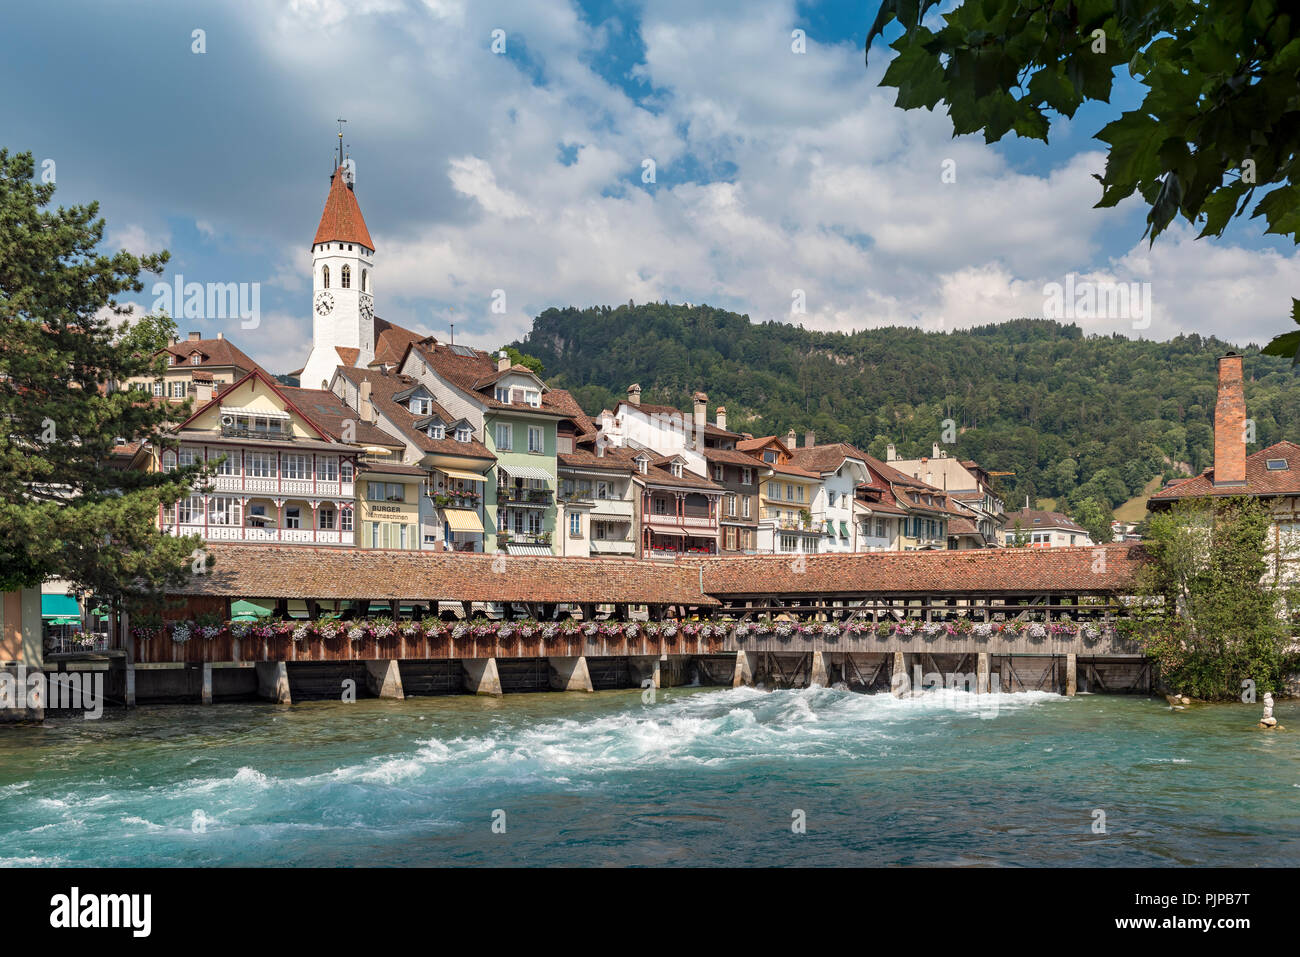 City view with wooden bridge, Untere Schleuse, river Aare, Thun, Switzerland Stock Photo